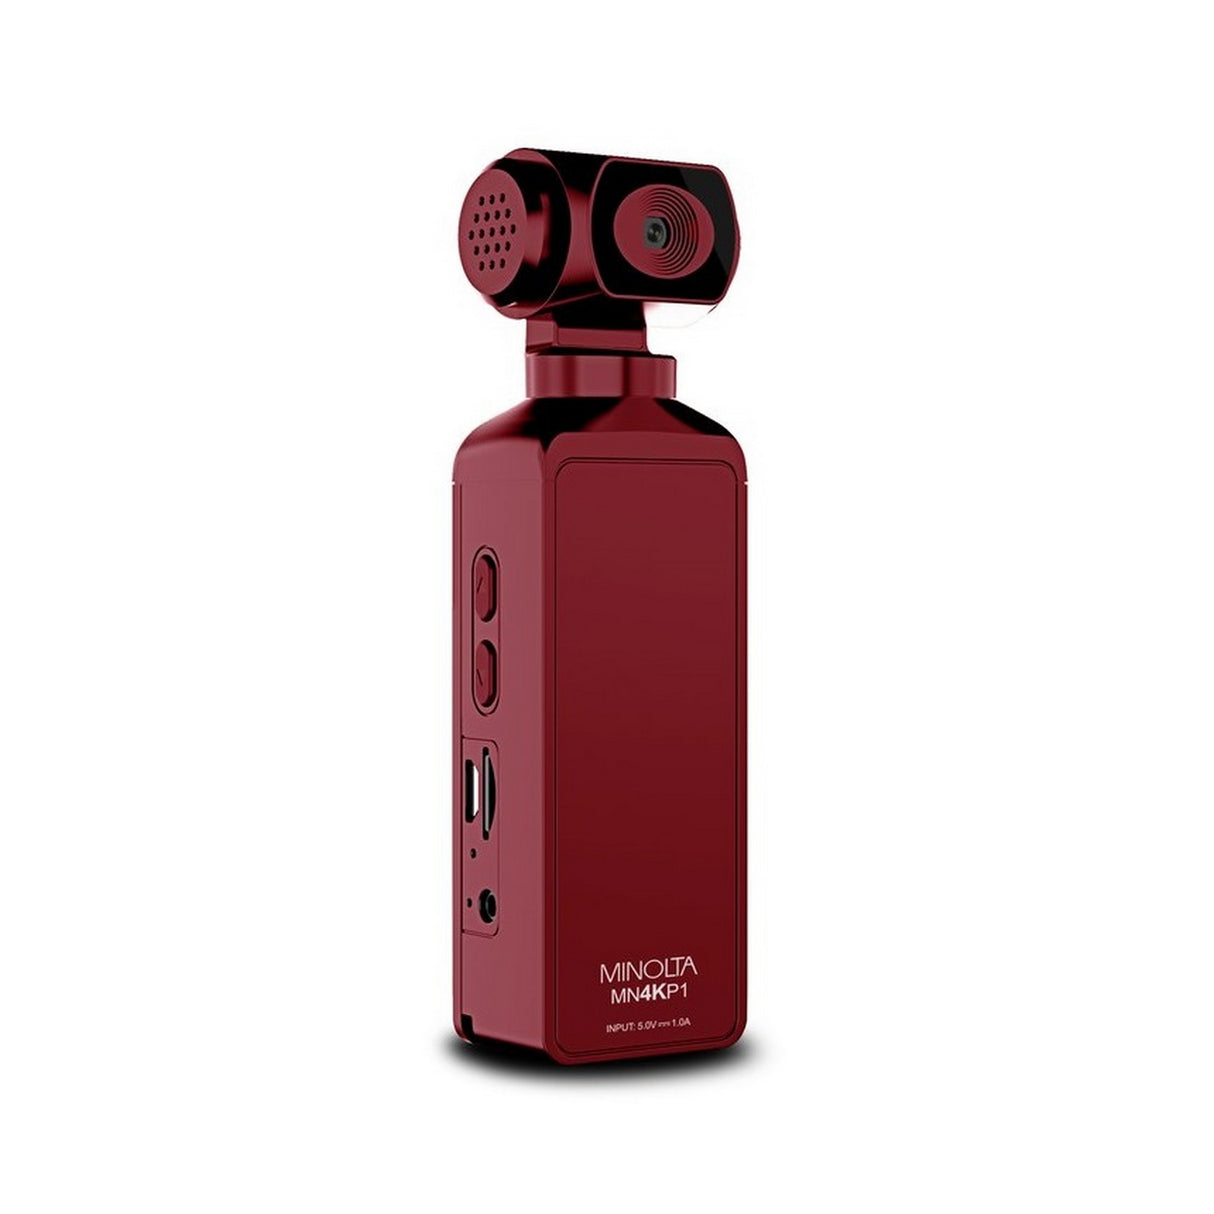 Minolta MN4KP1 Waterproof 4K Ultra HD Pocket Camcorder with WiFi, Red